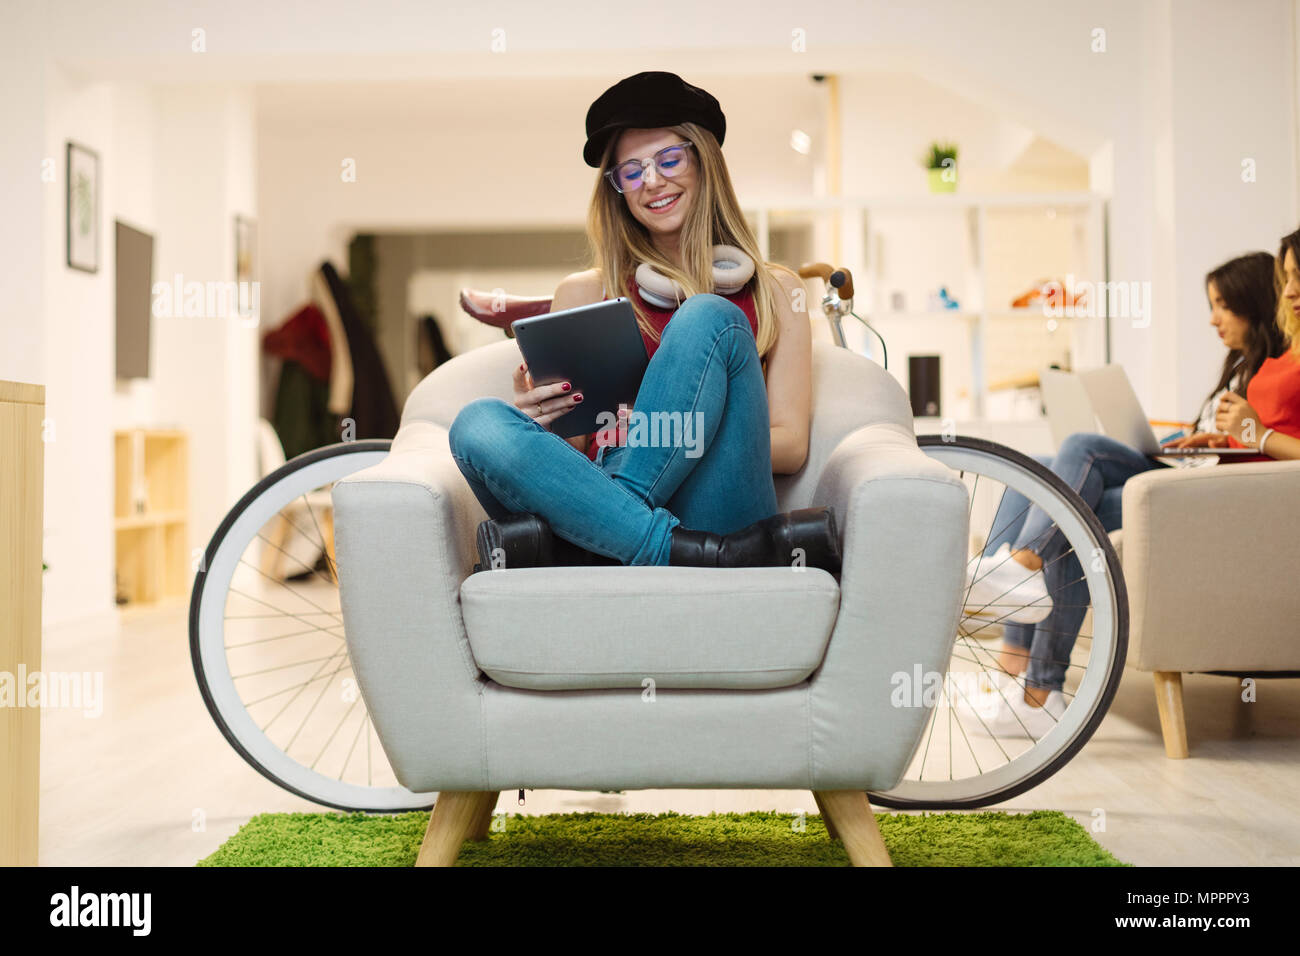 Casual young woman using tablet en espace de coworking Banque D'Images